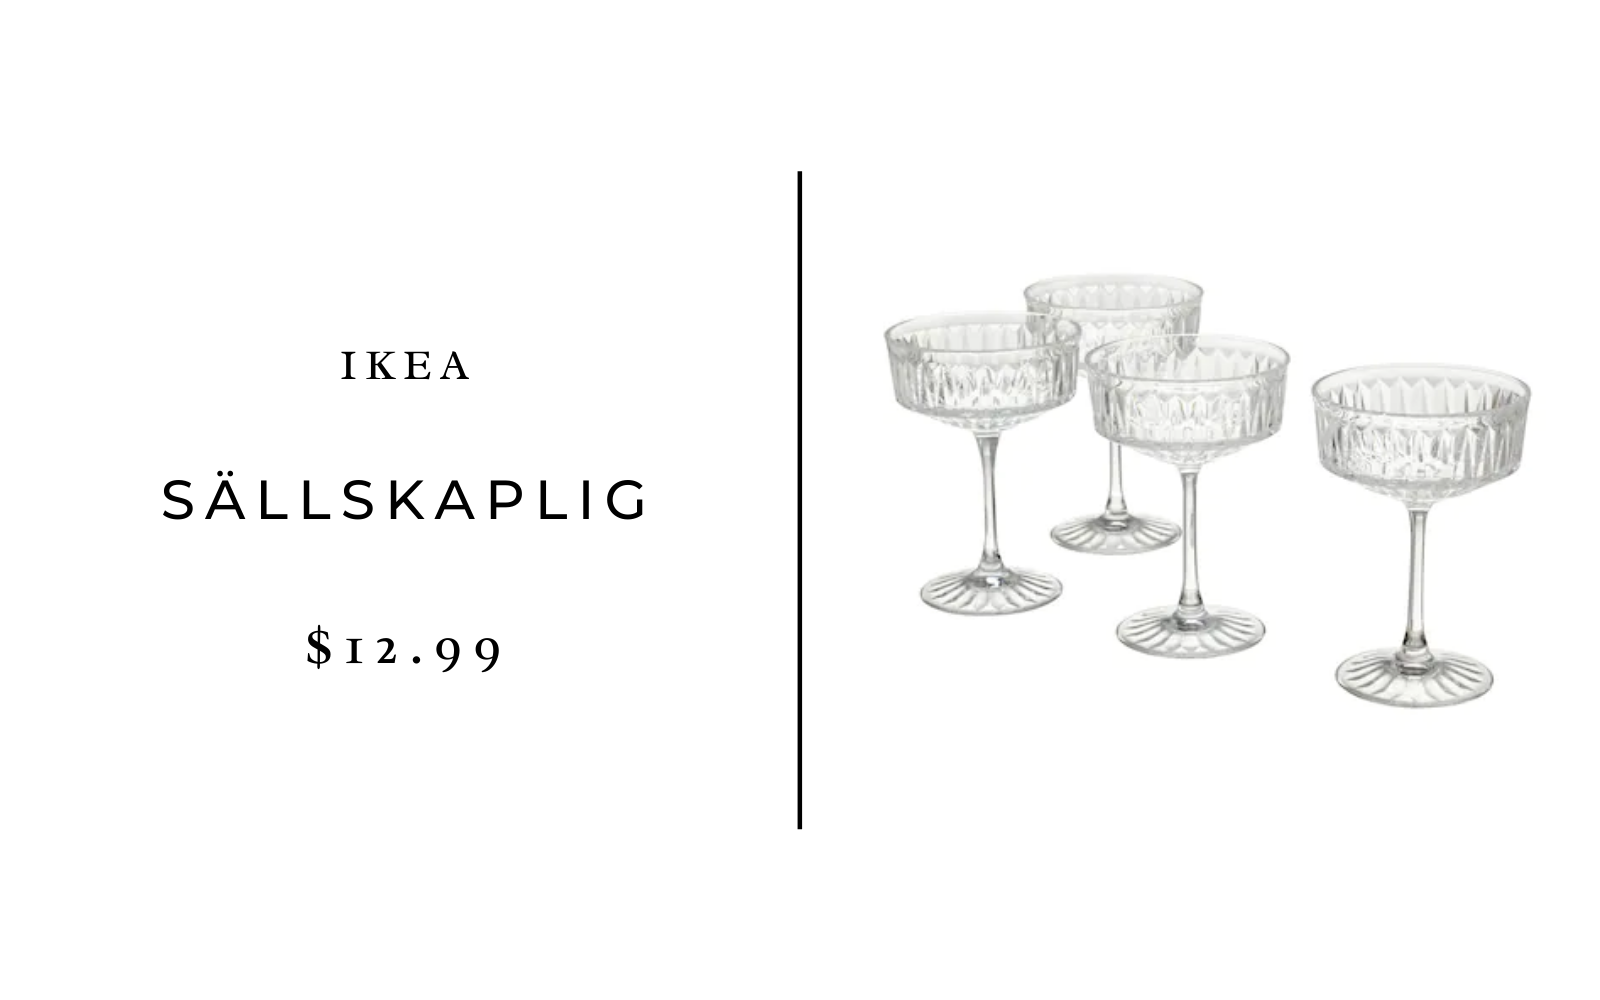 IKEA SÄLLSKAPLIG Champagne coupe, clear glass/patterned7 oz